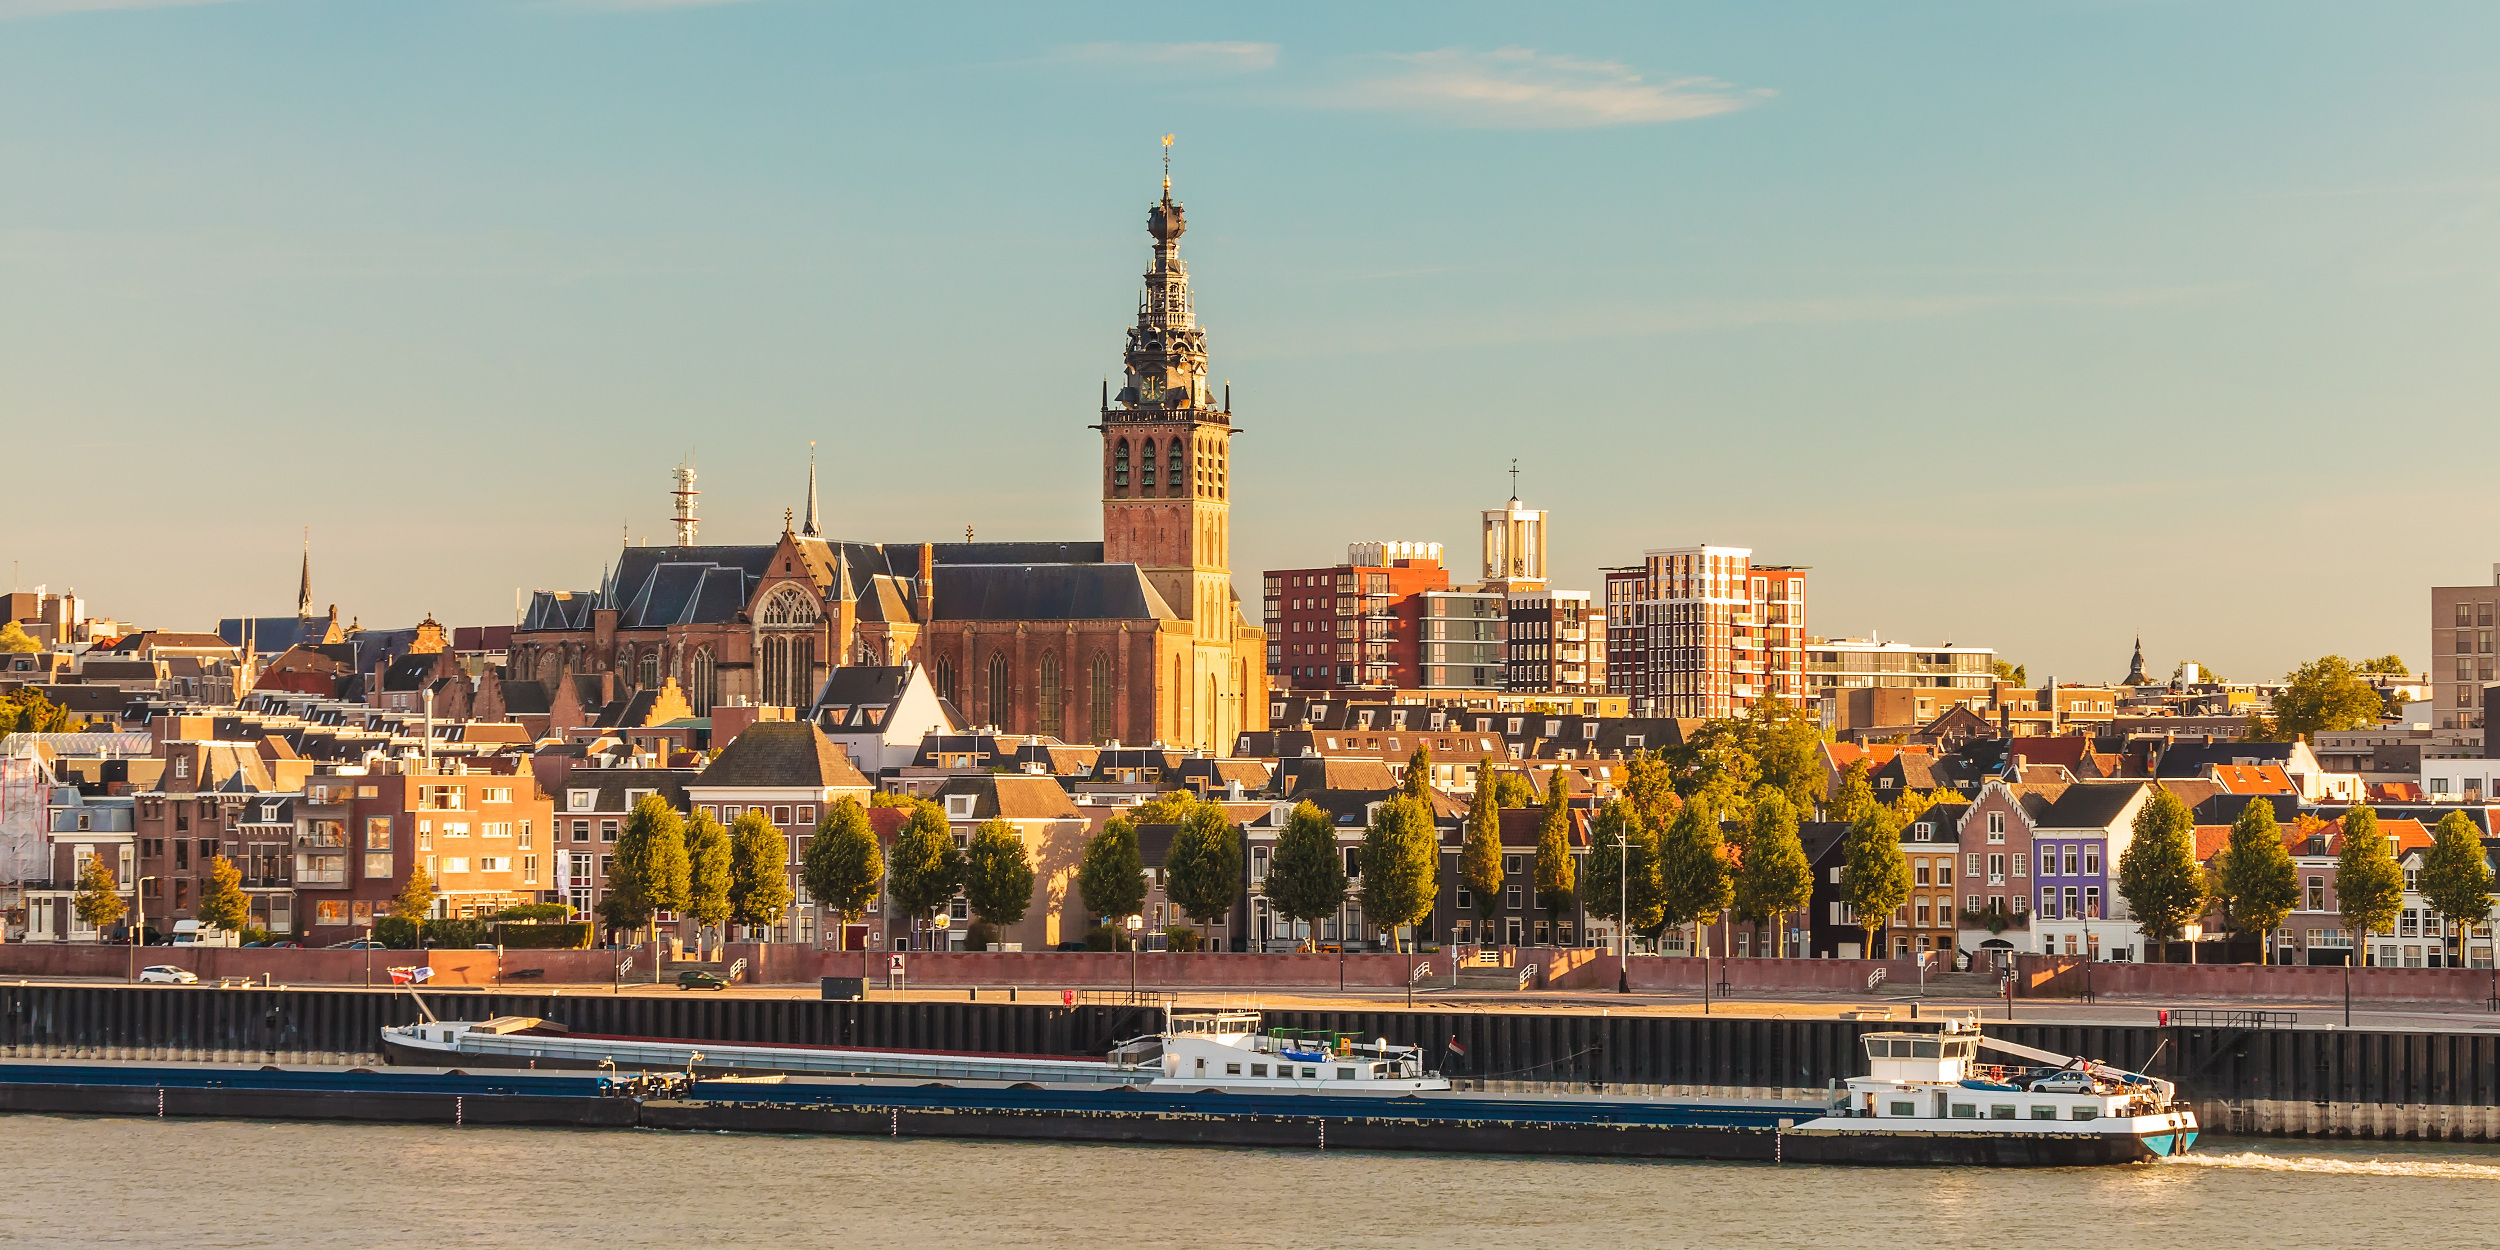 Beautiful view of the city Nijmegen